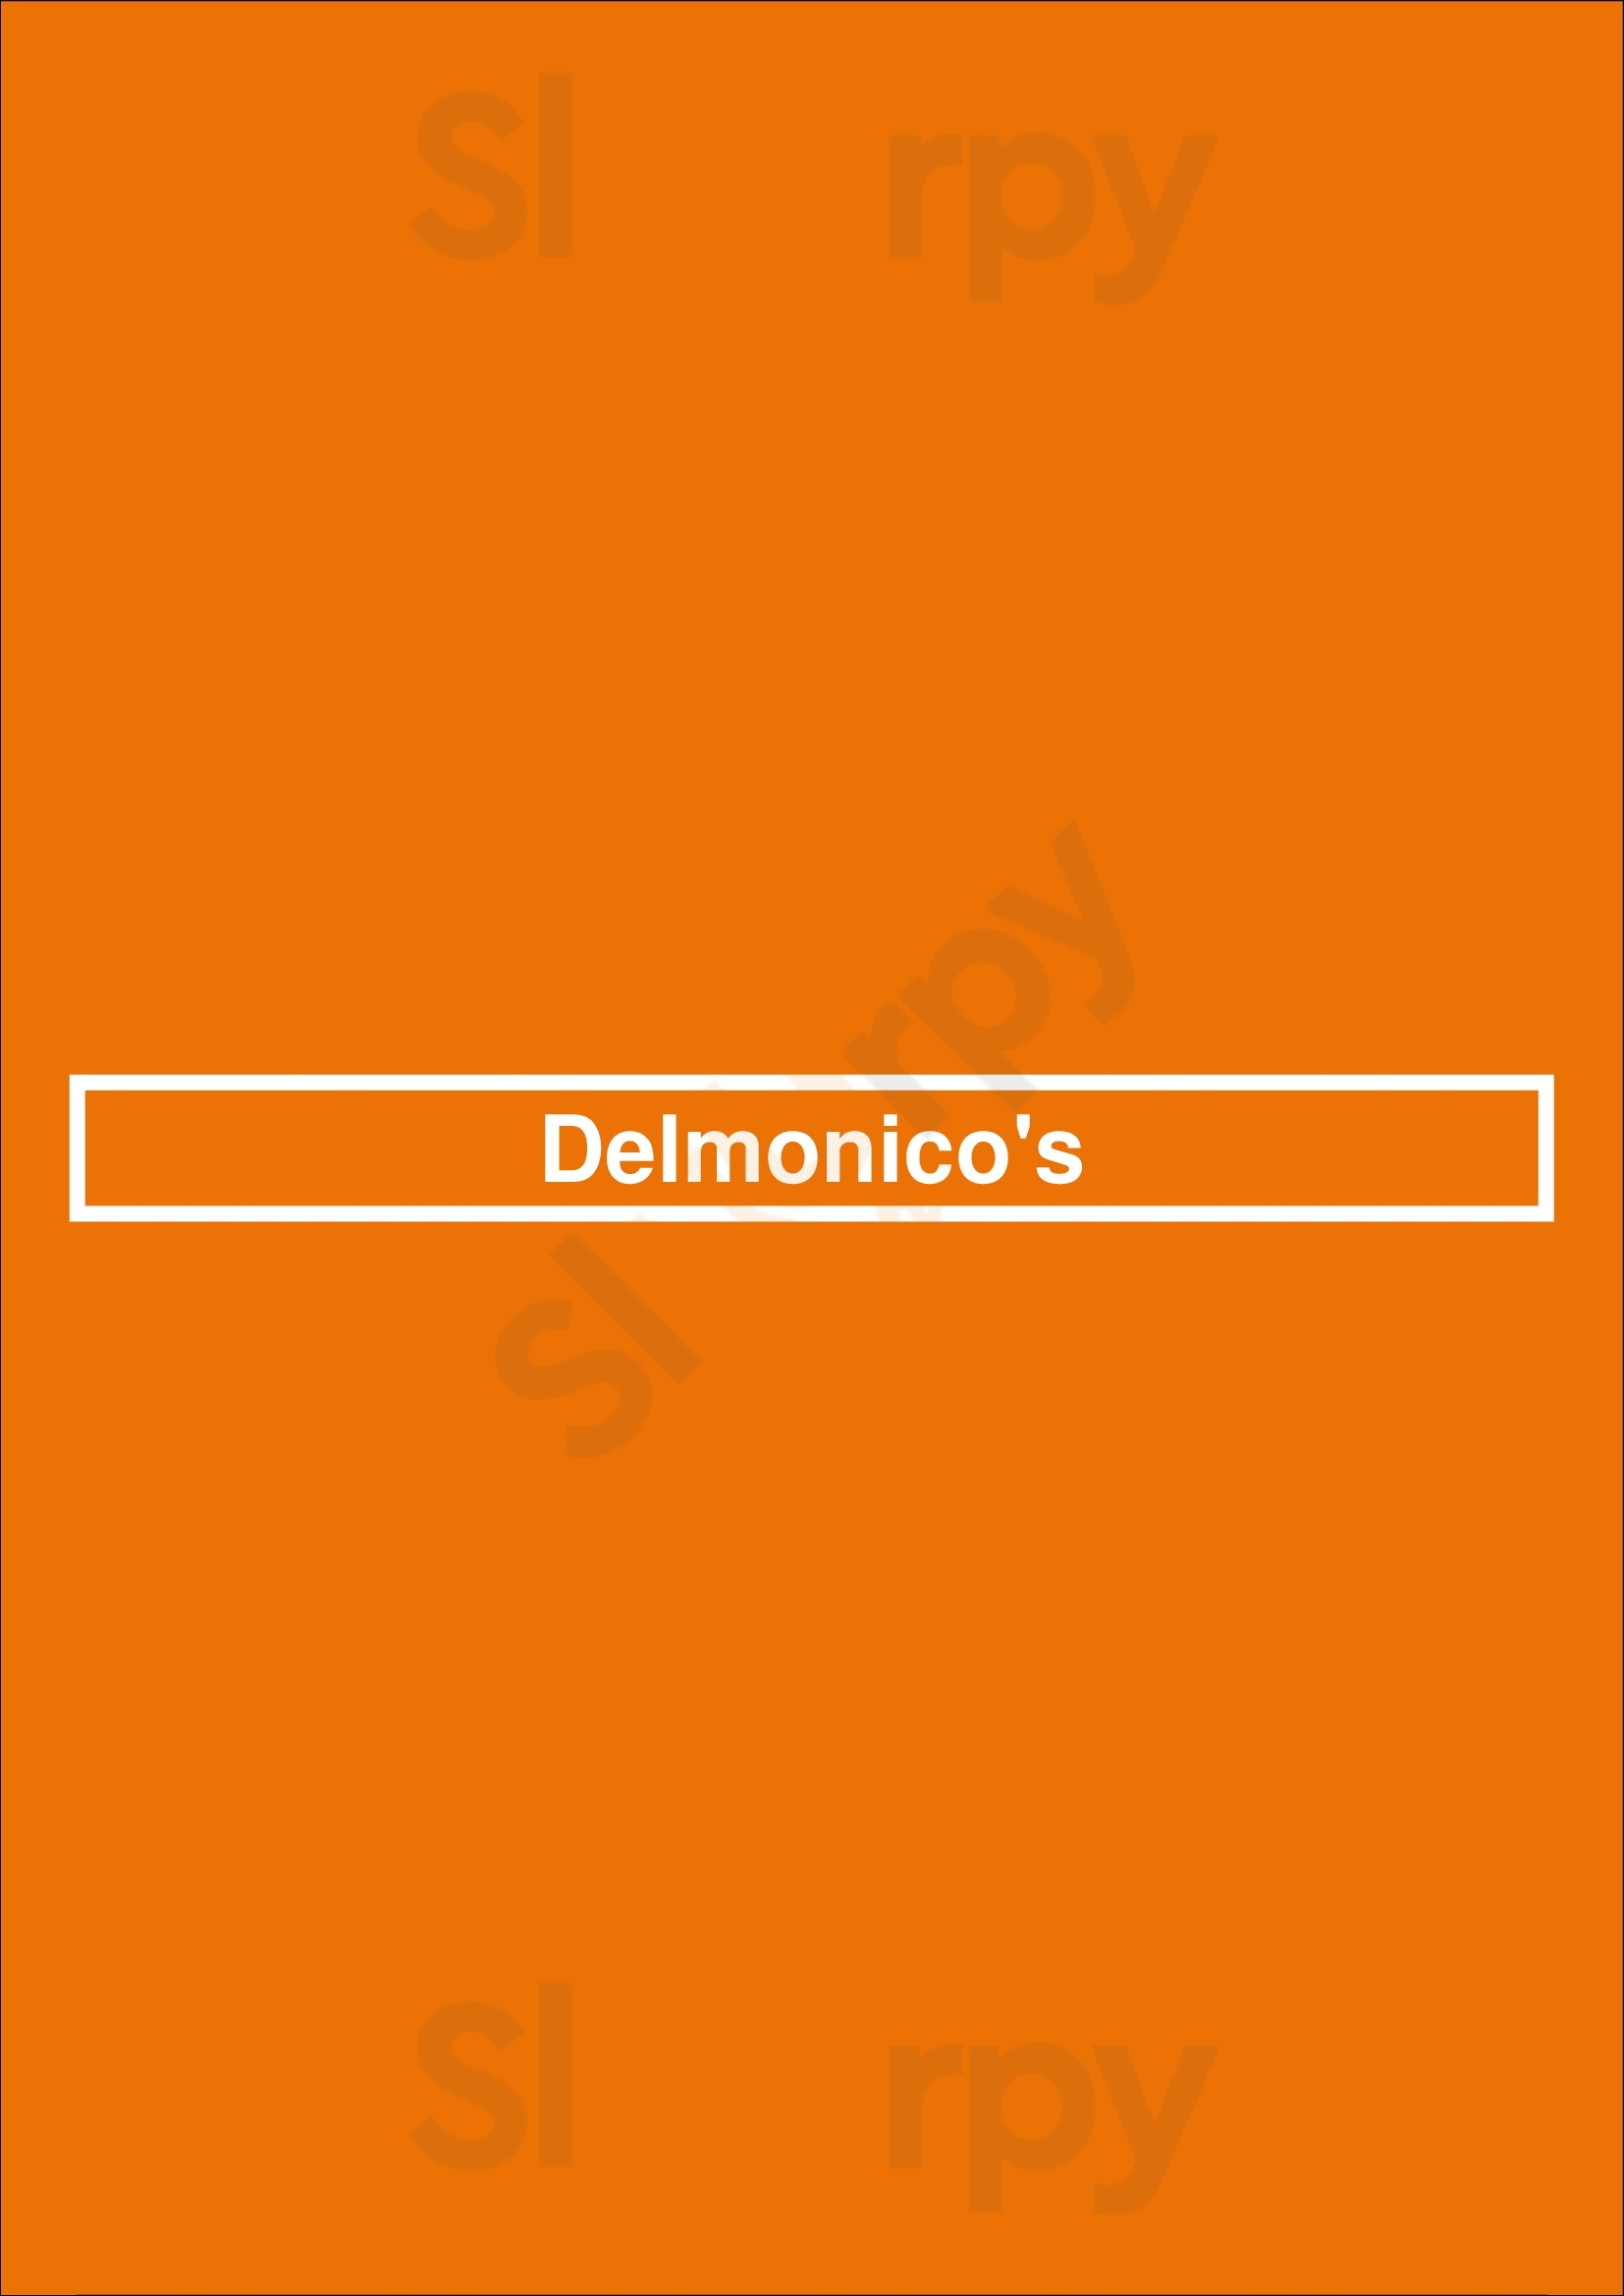 Delmonico's New York City Menu - 1